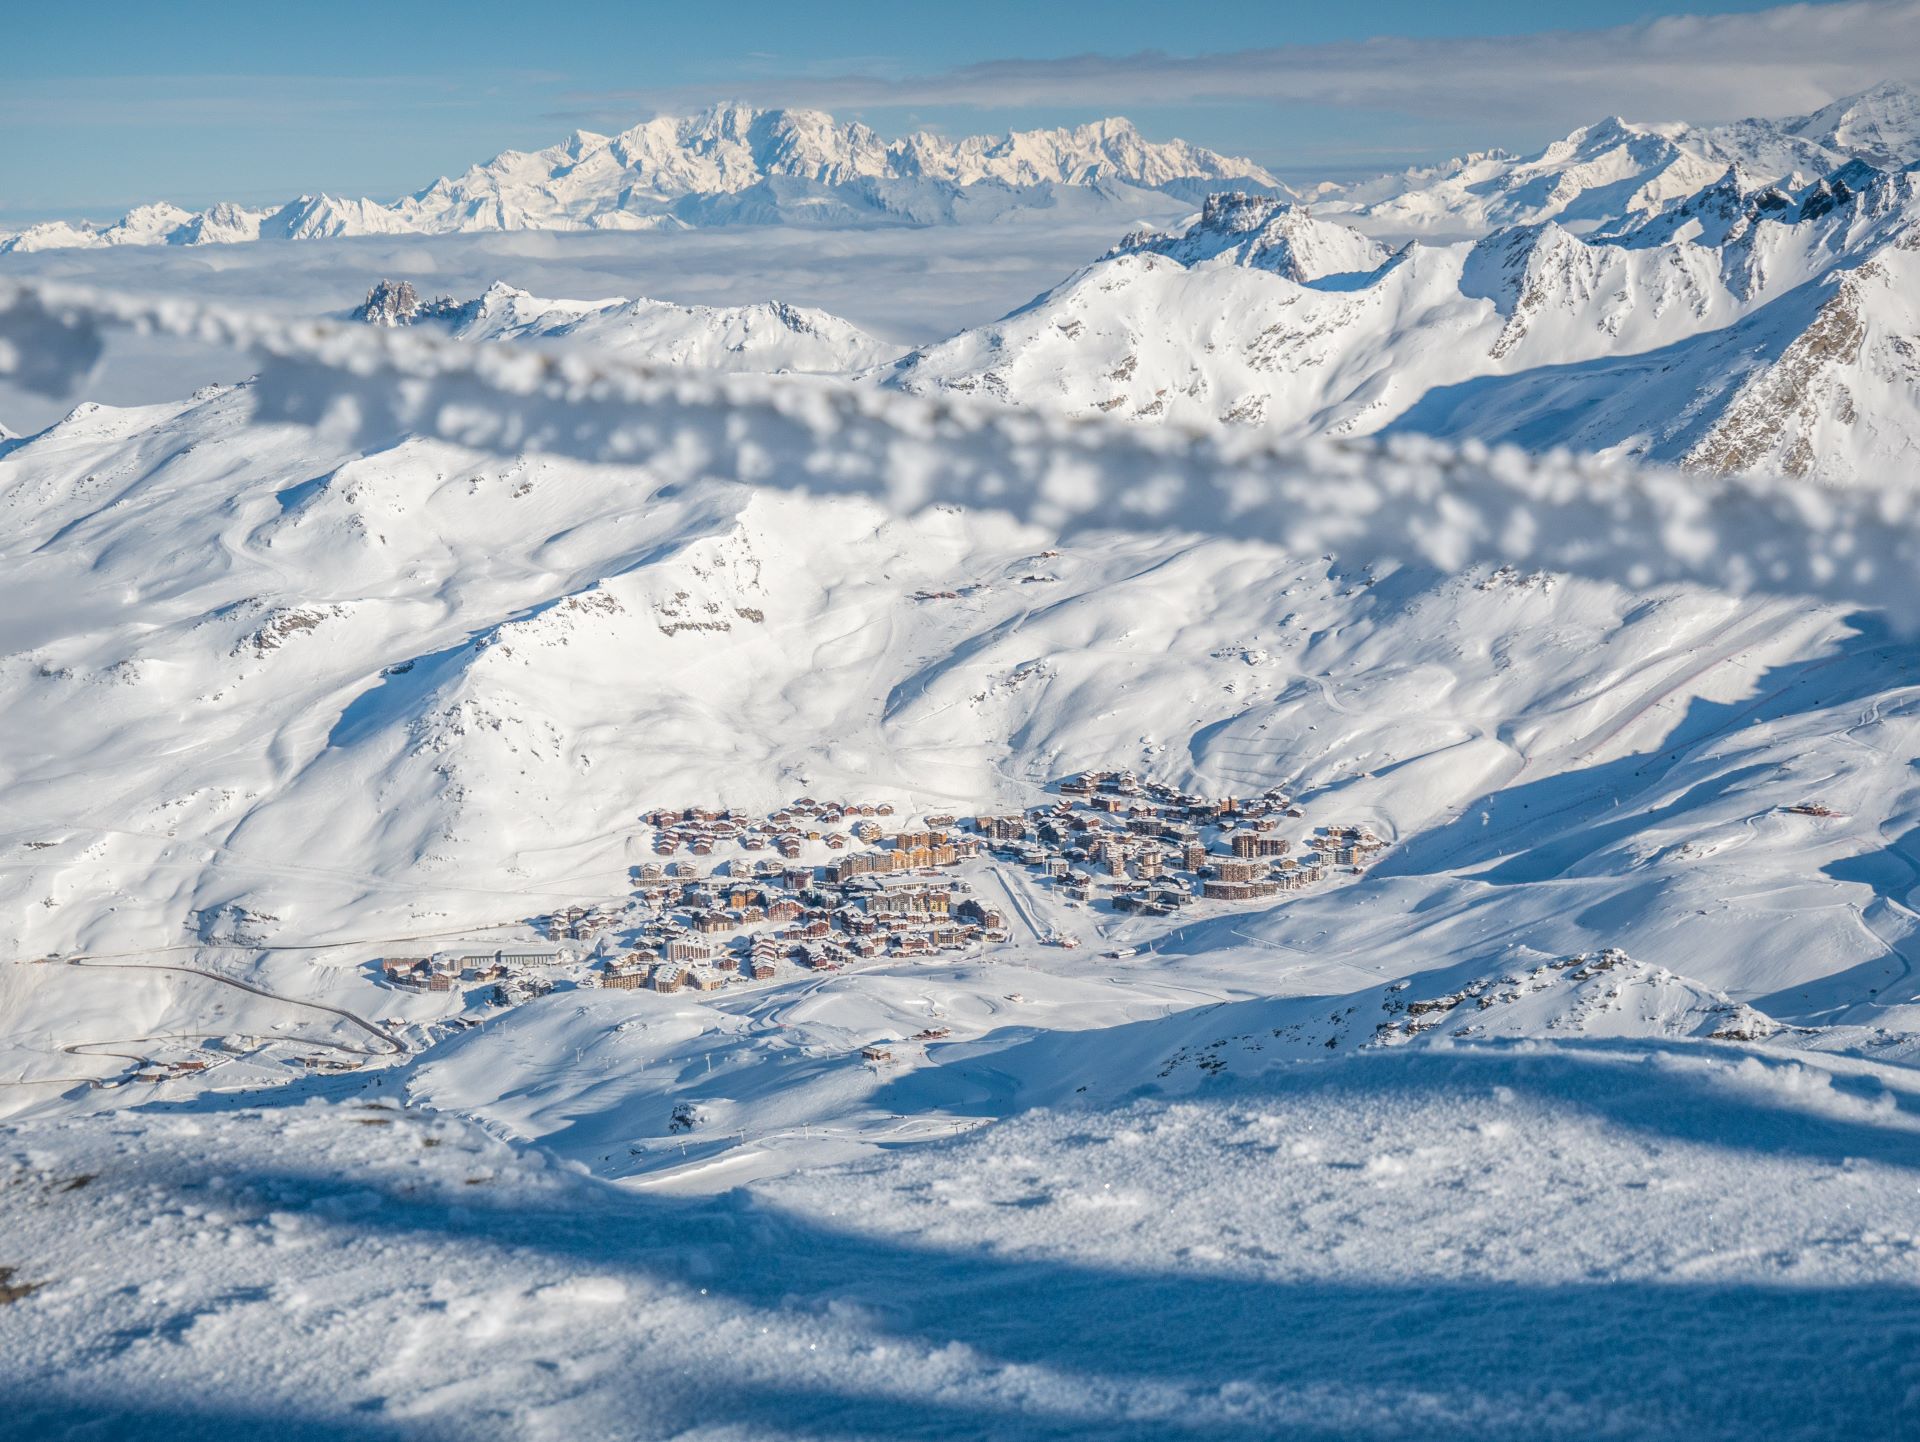 valthorens-vue-montagne-3 vallees-oxygene-ski-collection